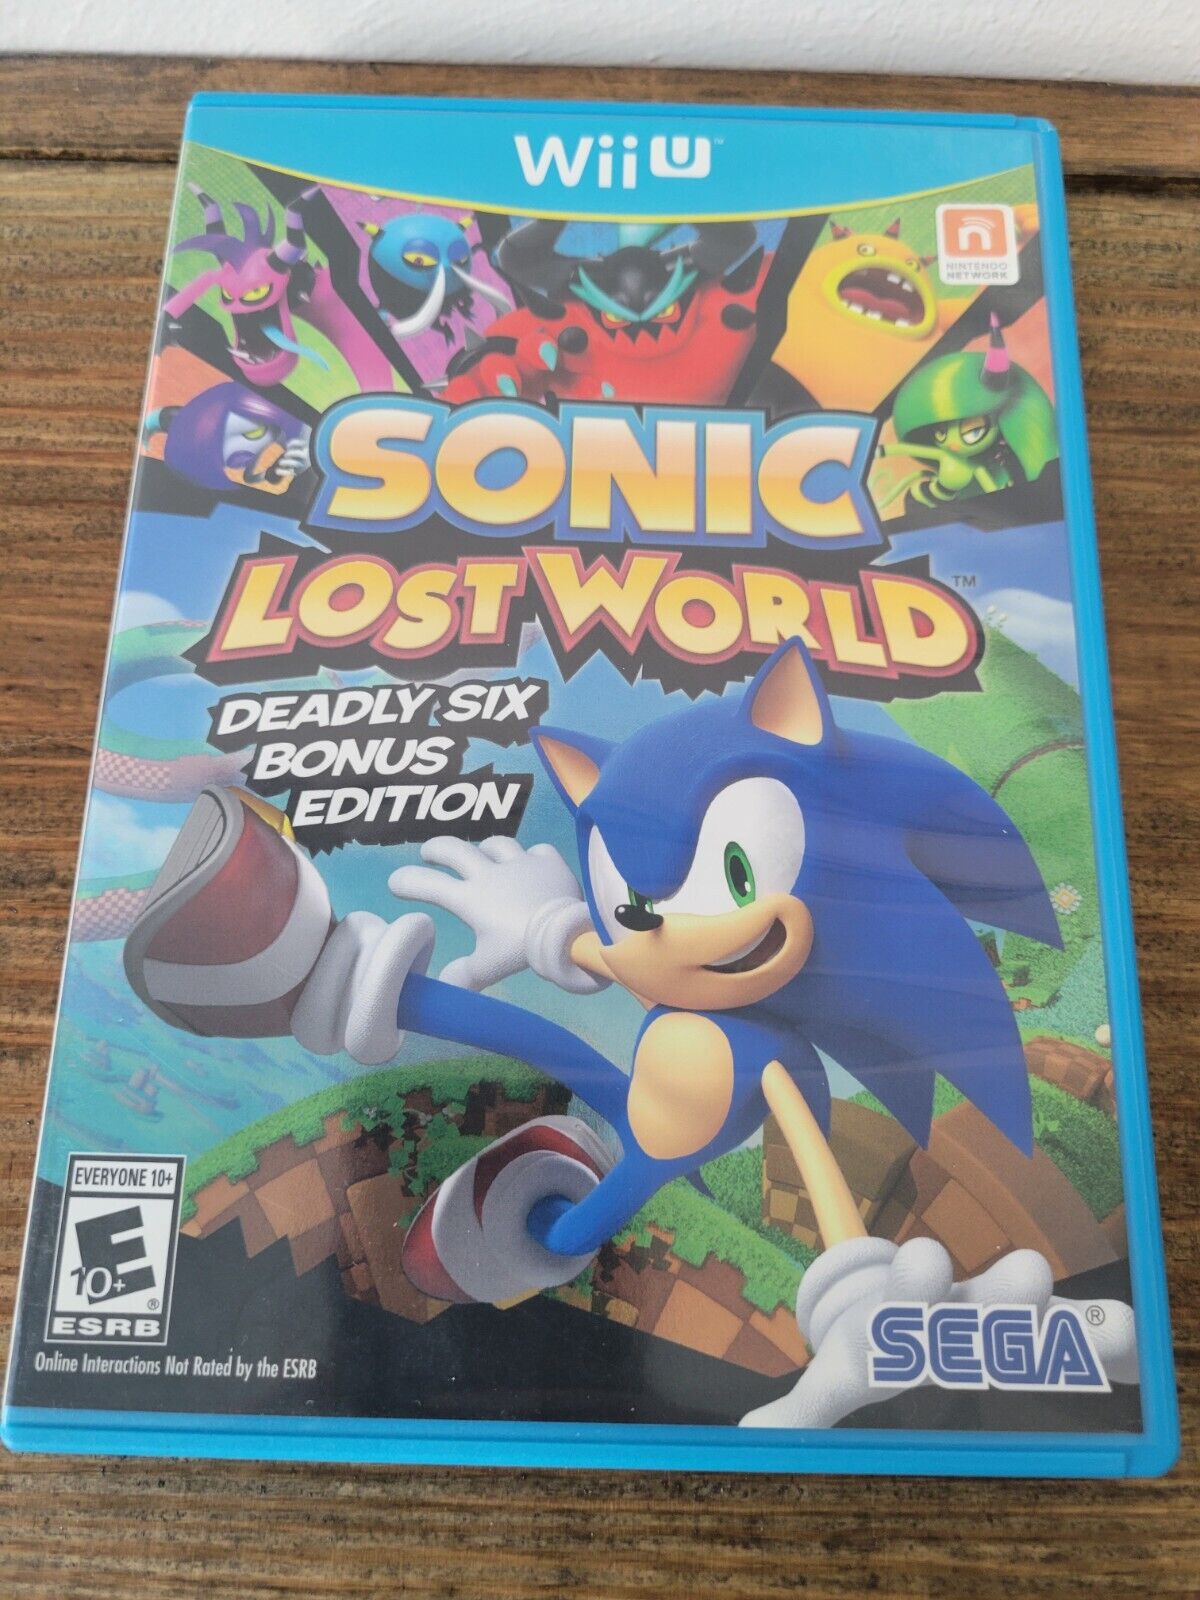 Sonic Lost World Deadly Six Bonus Edition Nintendo Wii U 2012 Complete MINT disc